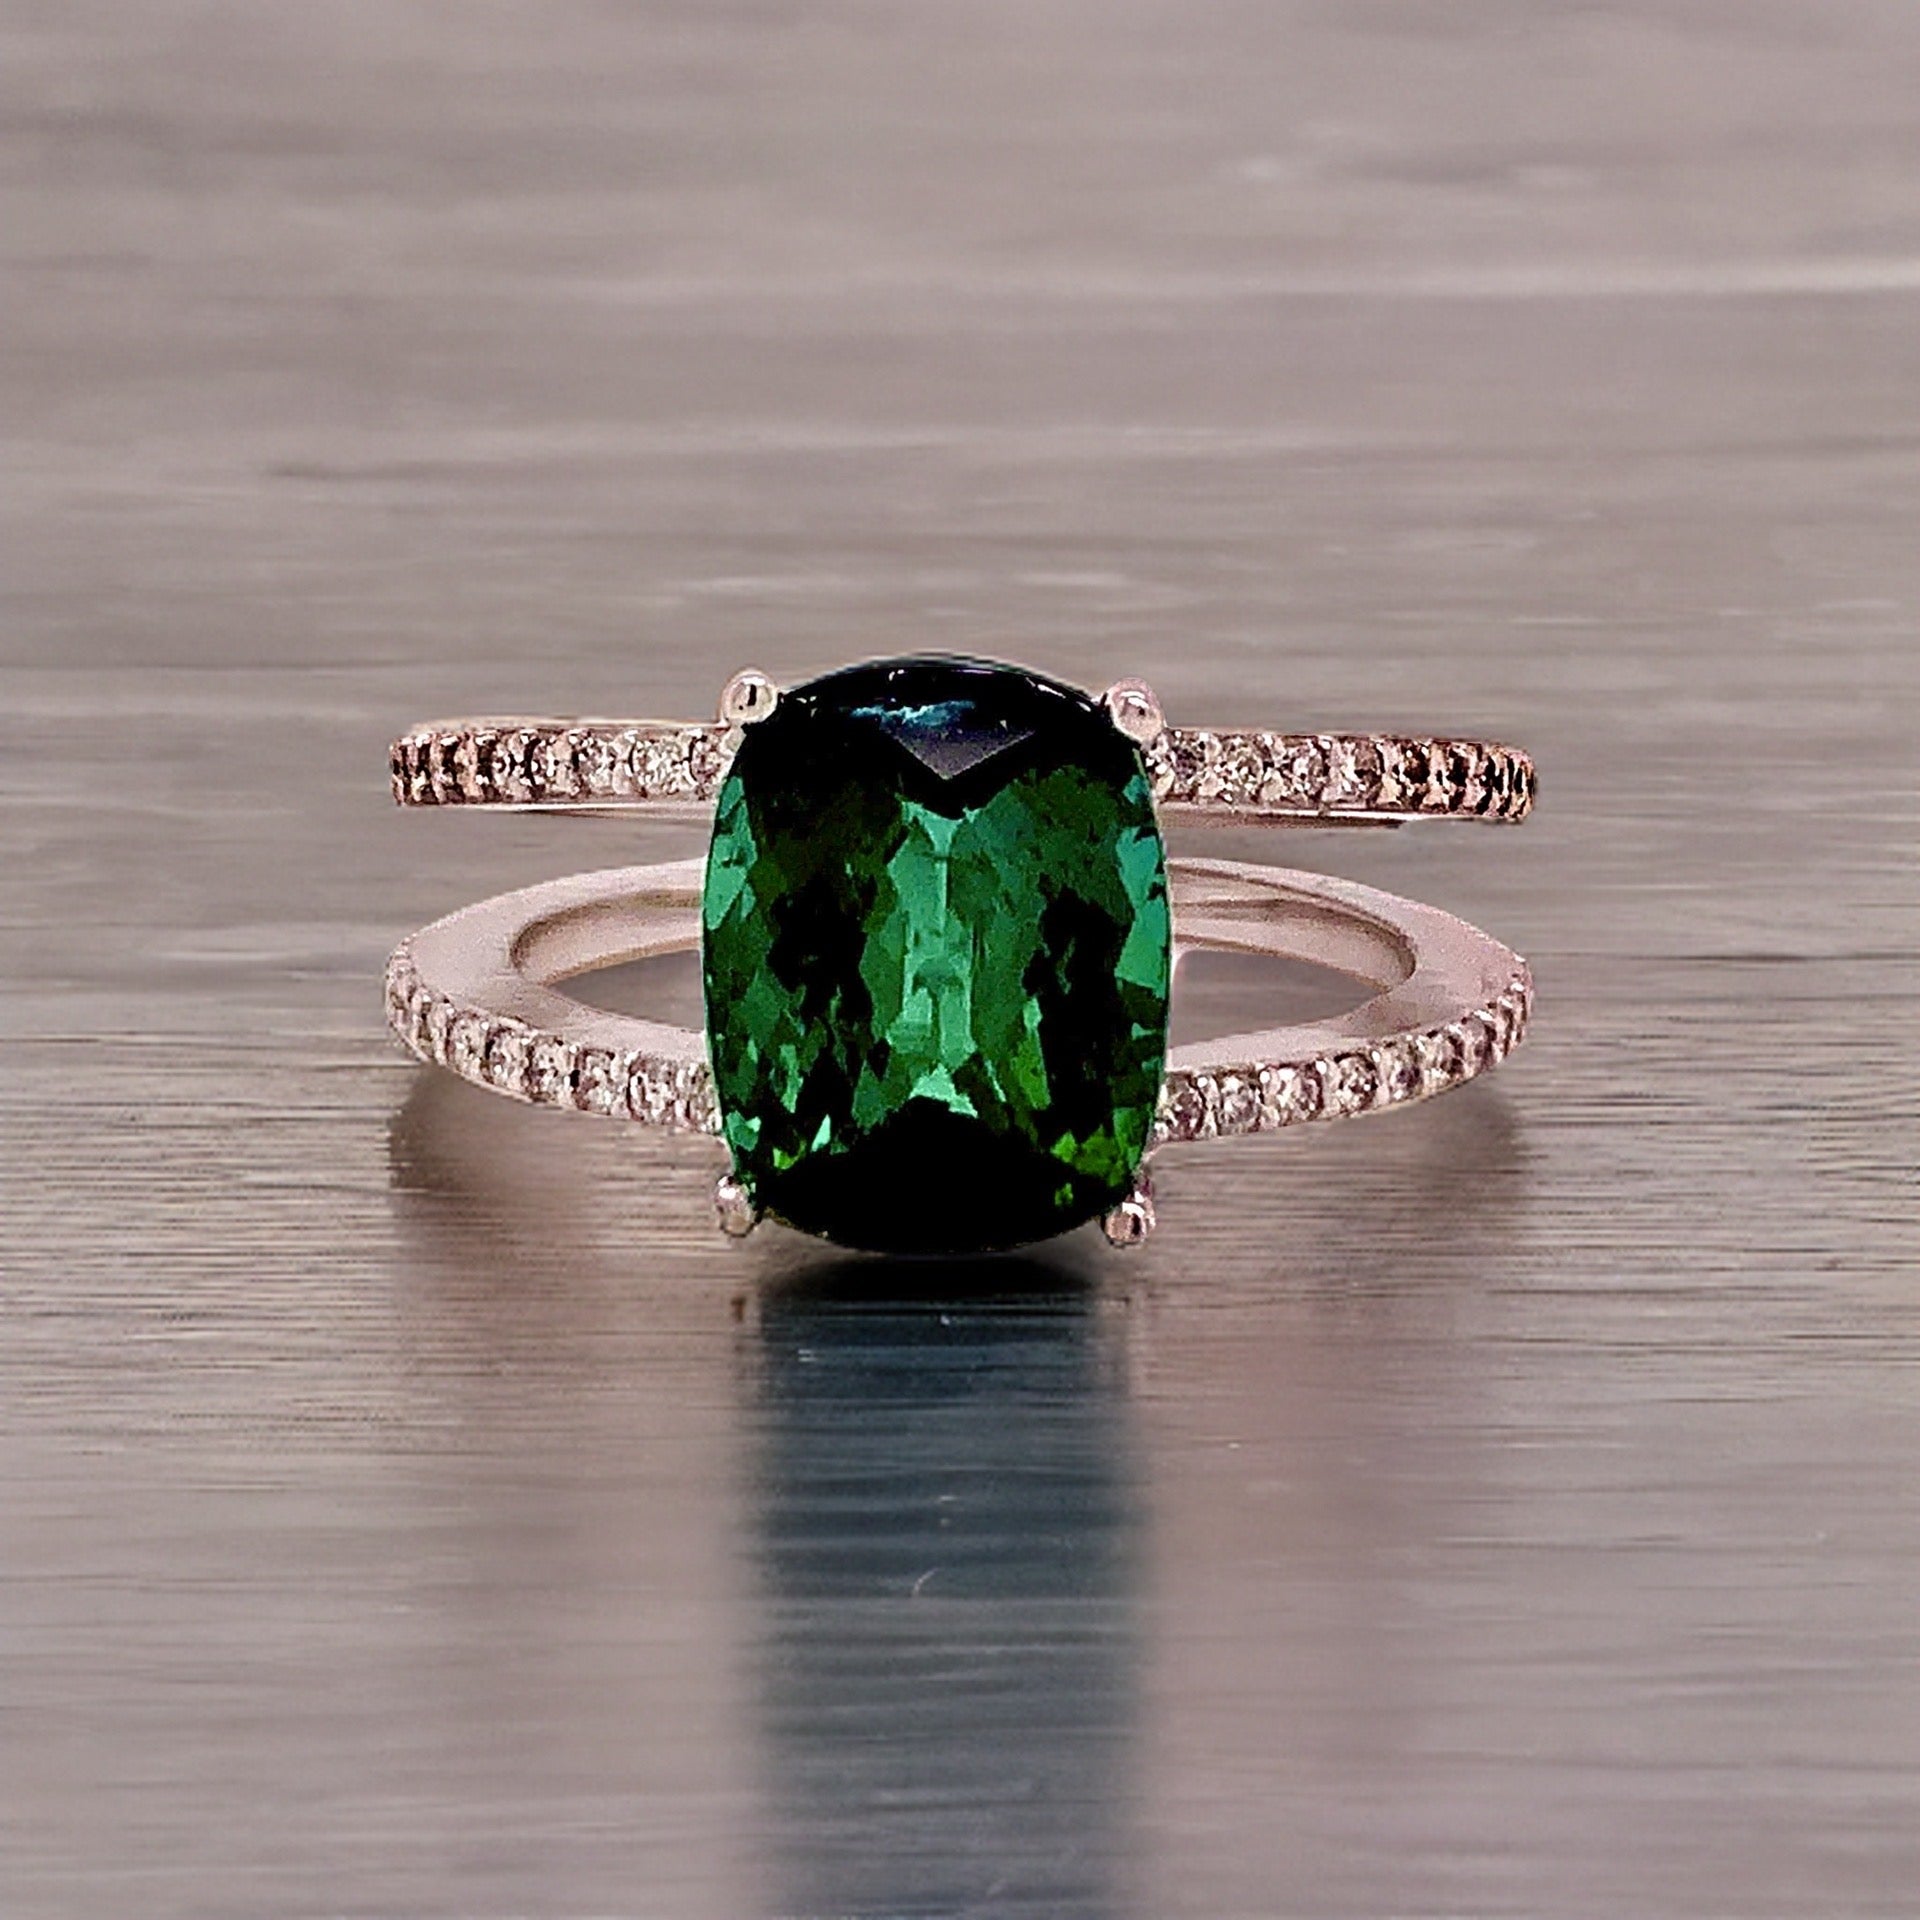 Natural Tourmaline Diamond Ring 14k WG 3.33 TCW Certified $4,950 111876 - Certified Fine Jewelry